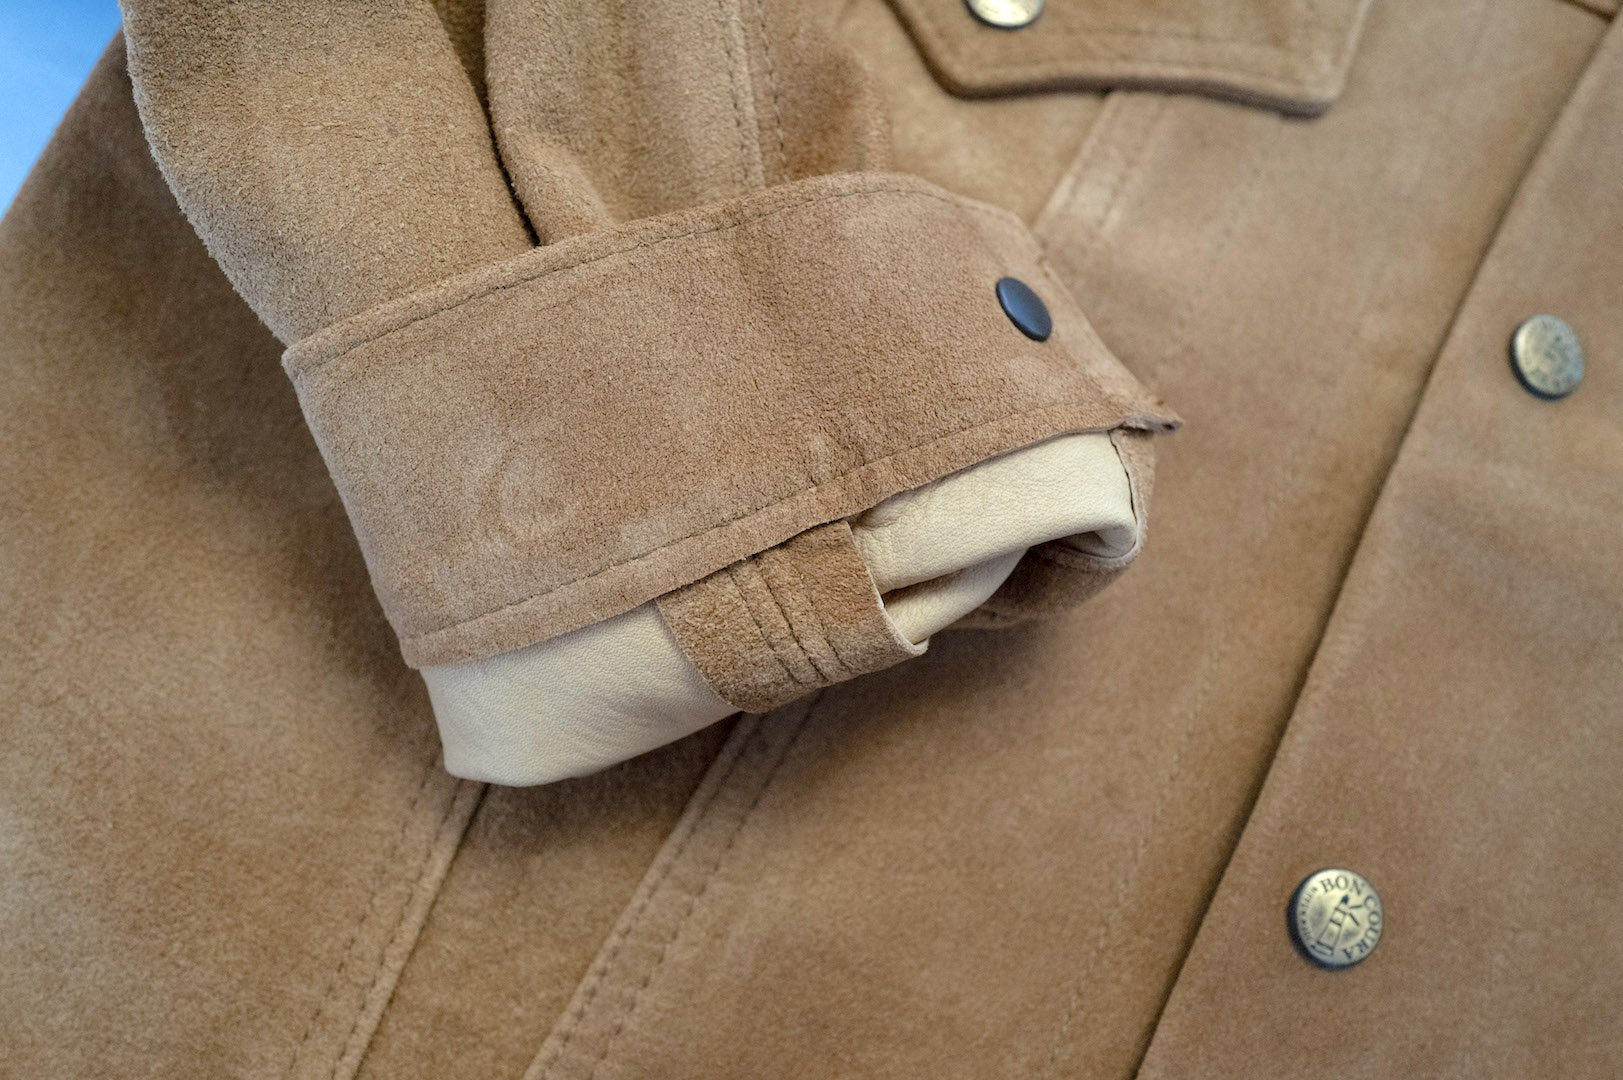 Boncoura Type 3 Suede Cowhide Jacket